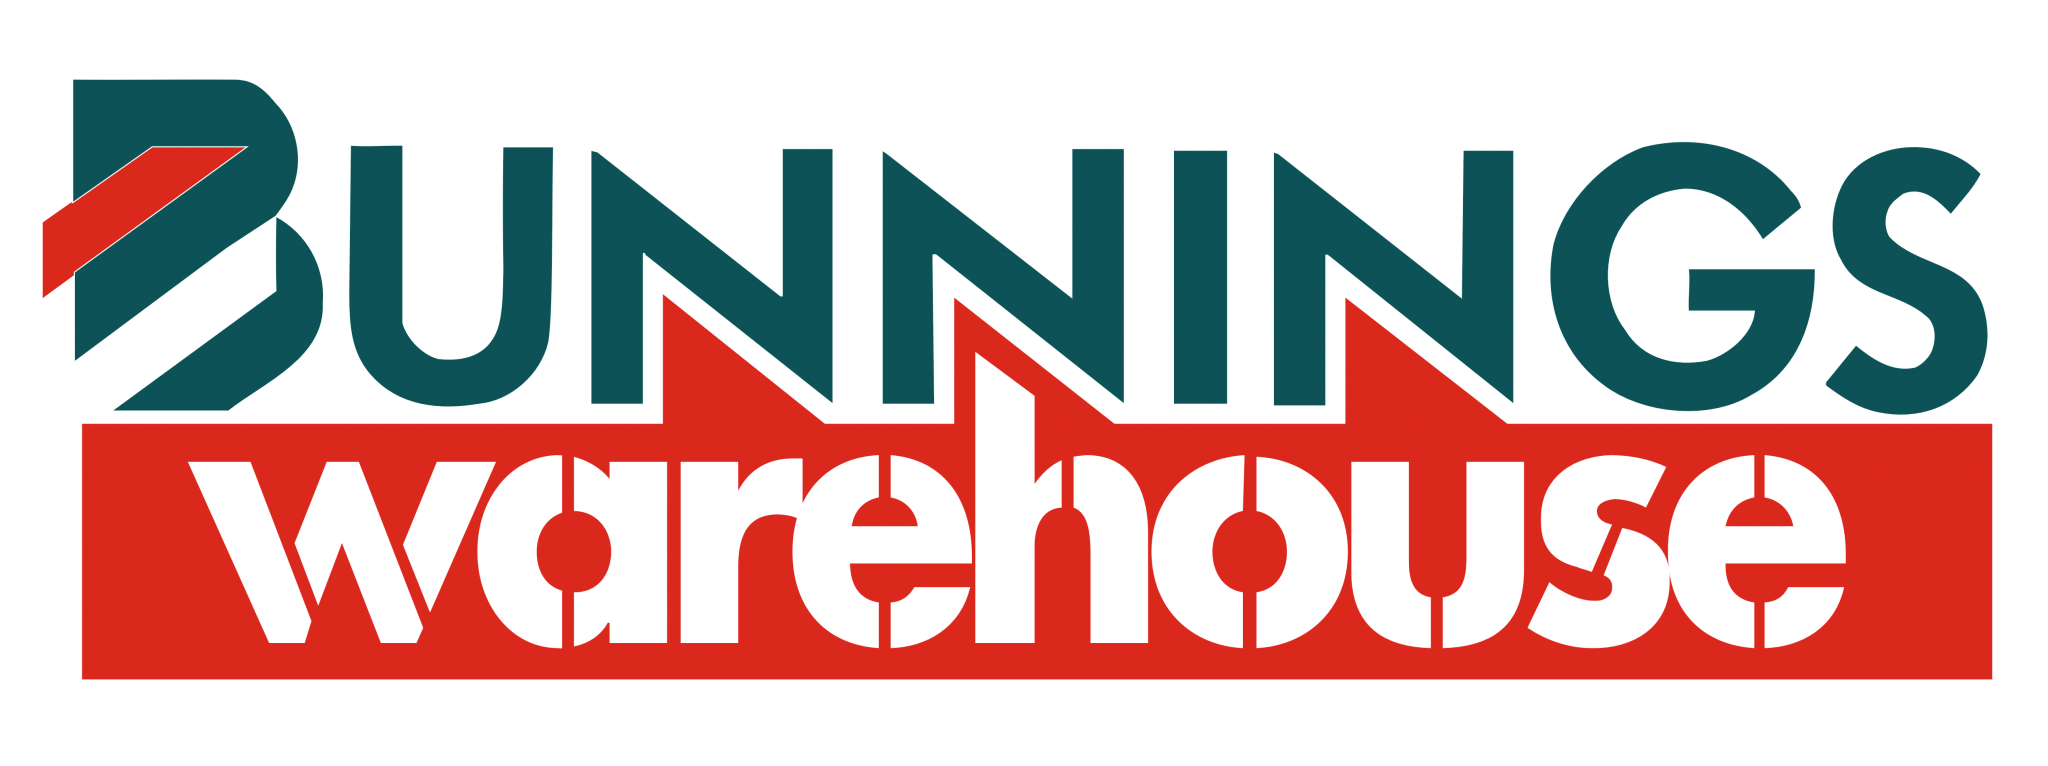 Bunnings_Warehouse_logo-2048x766